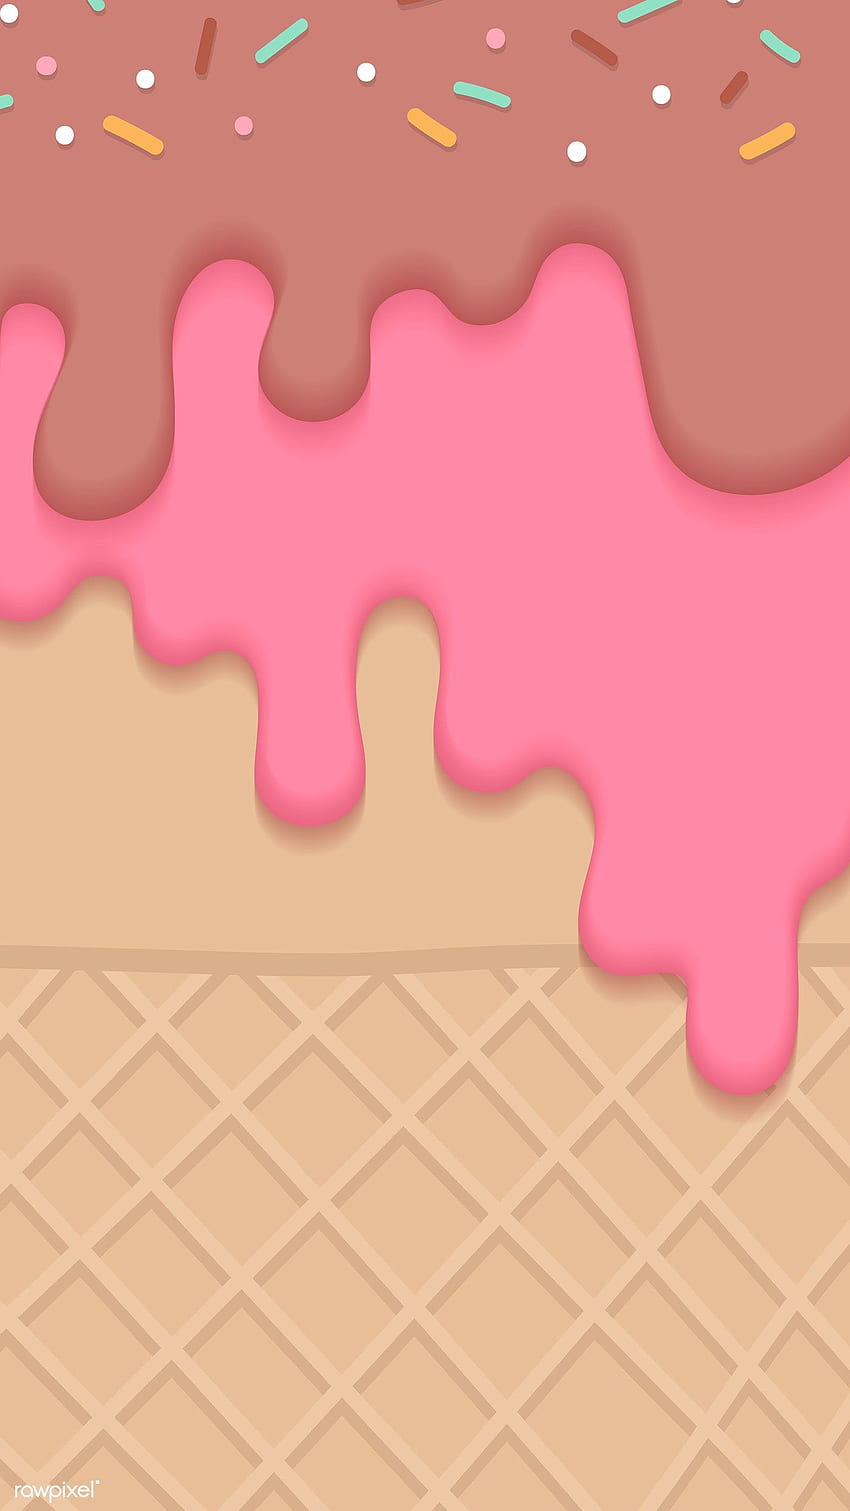 Melting ice cream phone background. Royalty stock vector, Rainbow Ice Cream HD phone wallpaper